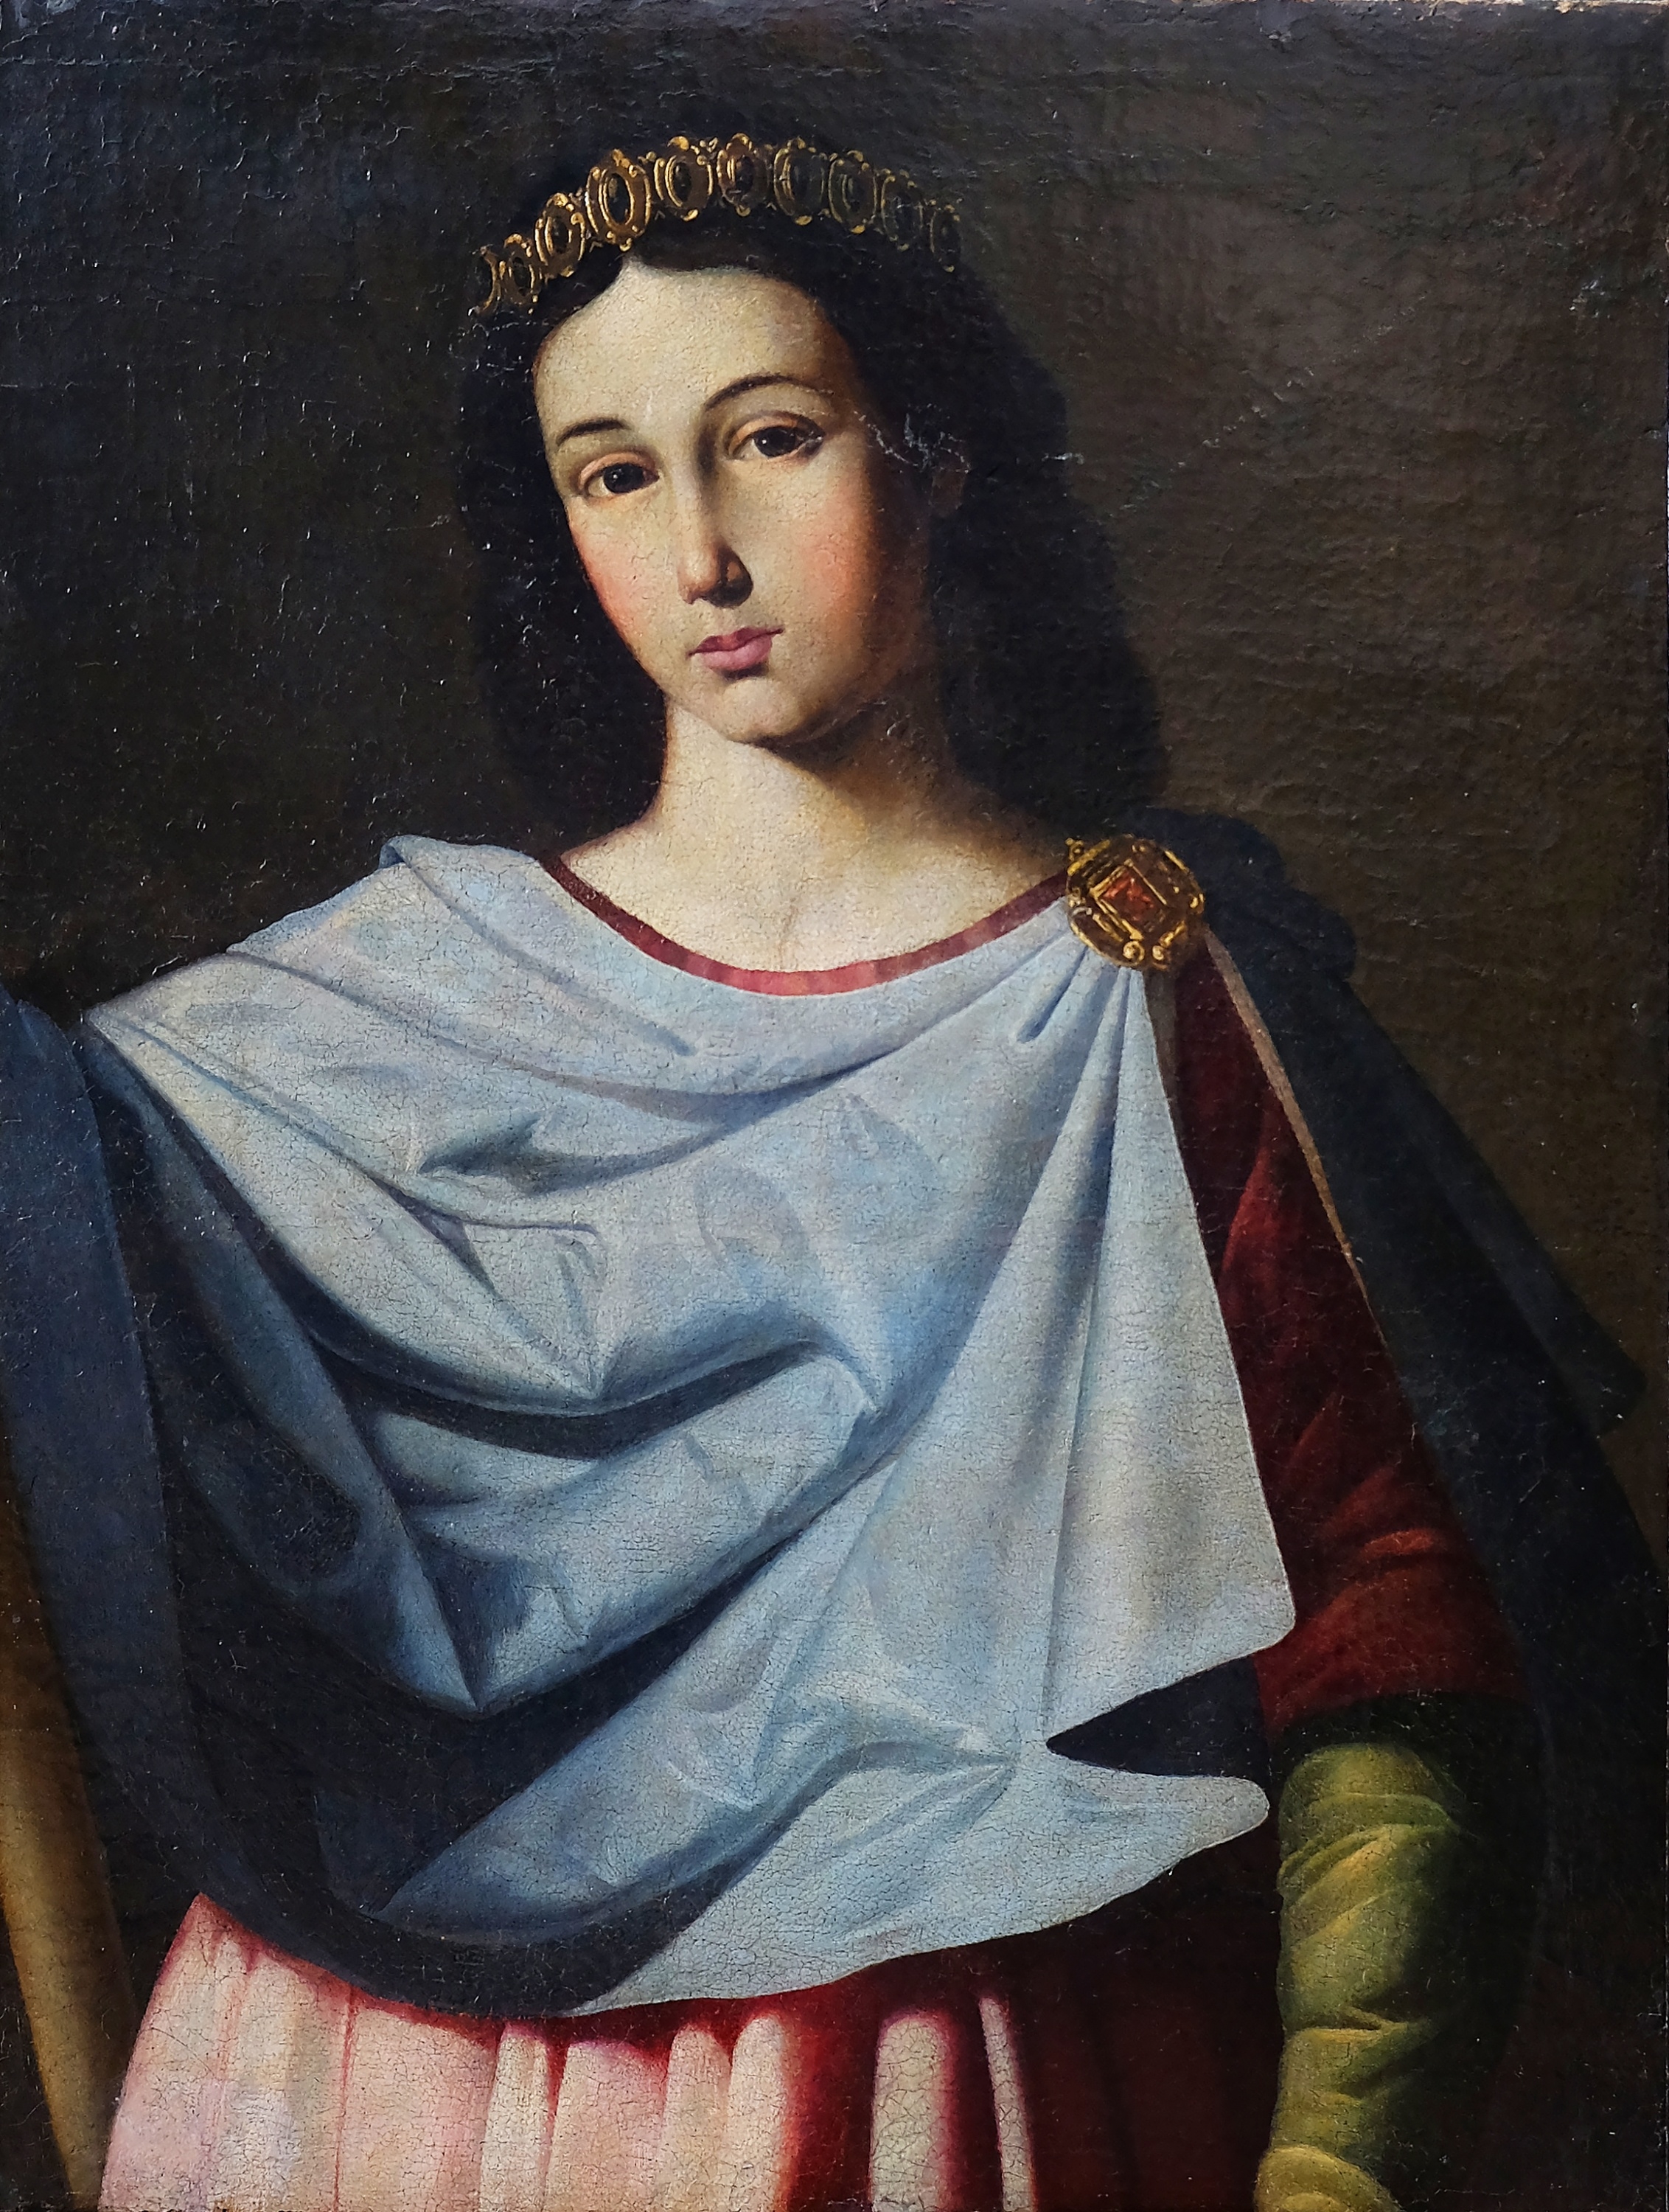 Artwork by Francisco de Zurbarán, Saint Eulalia, Made of Oil on canvas